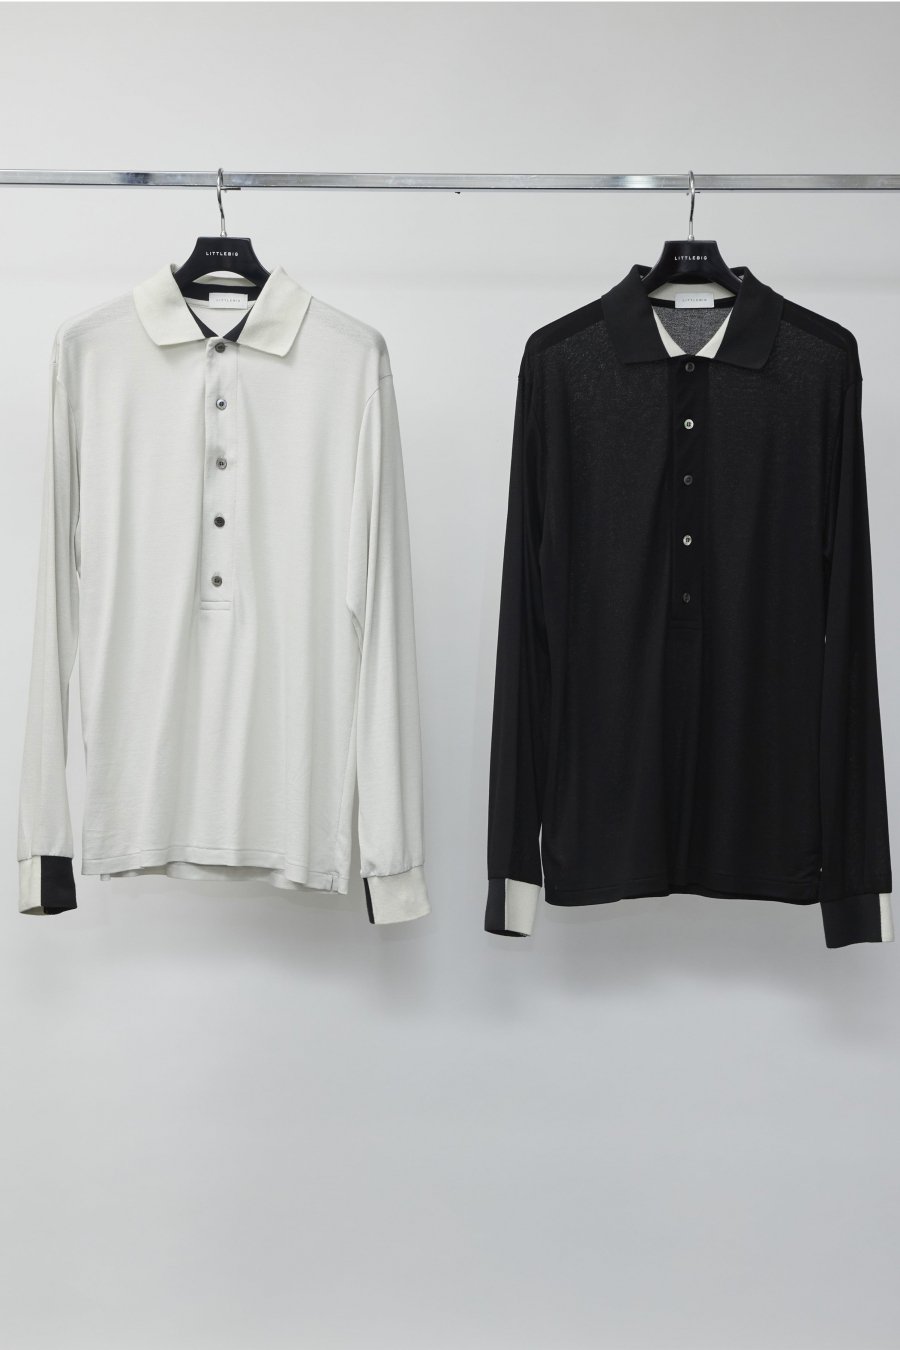 LITTLEBIG（リトルビッグ）のL/S Polo SH Gray or Black(ポロシャツ)の通販サイト-大阪 堀江 PALETTE art  alive（パレットアートアライヴ）-